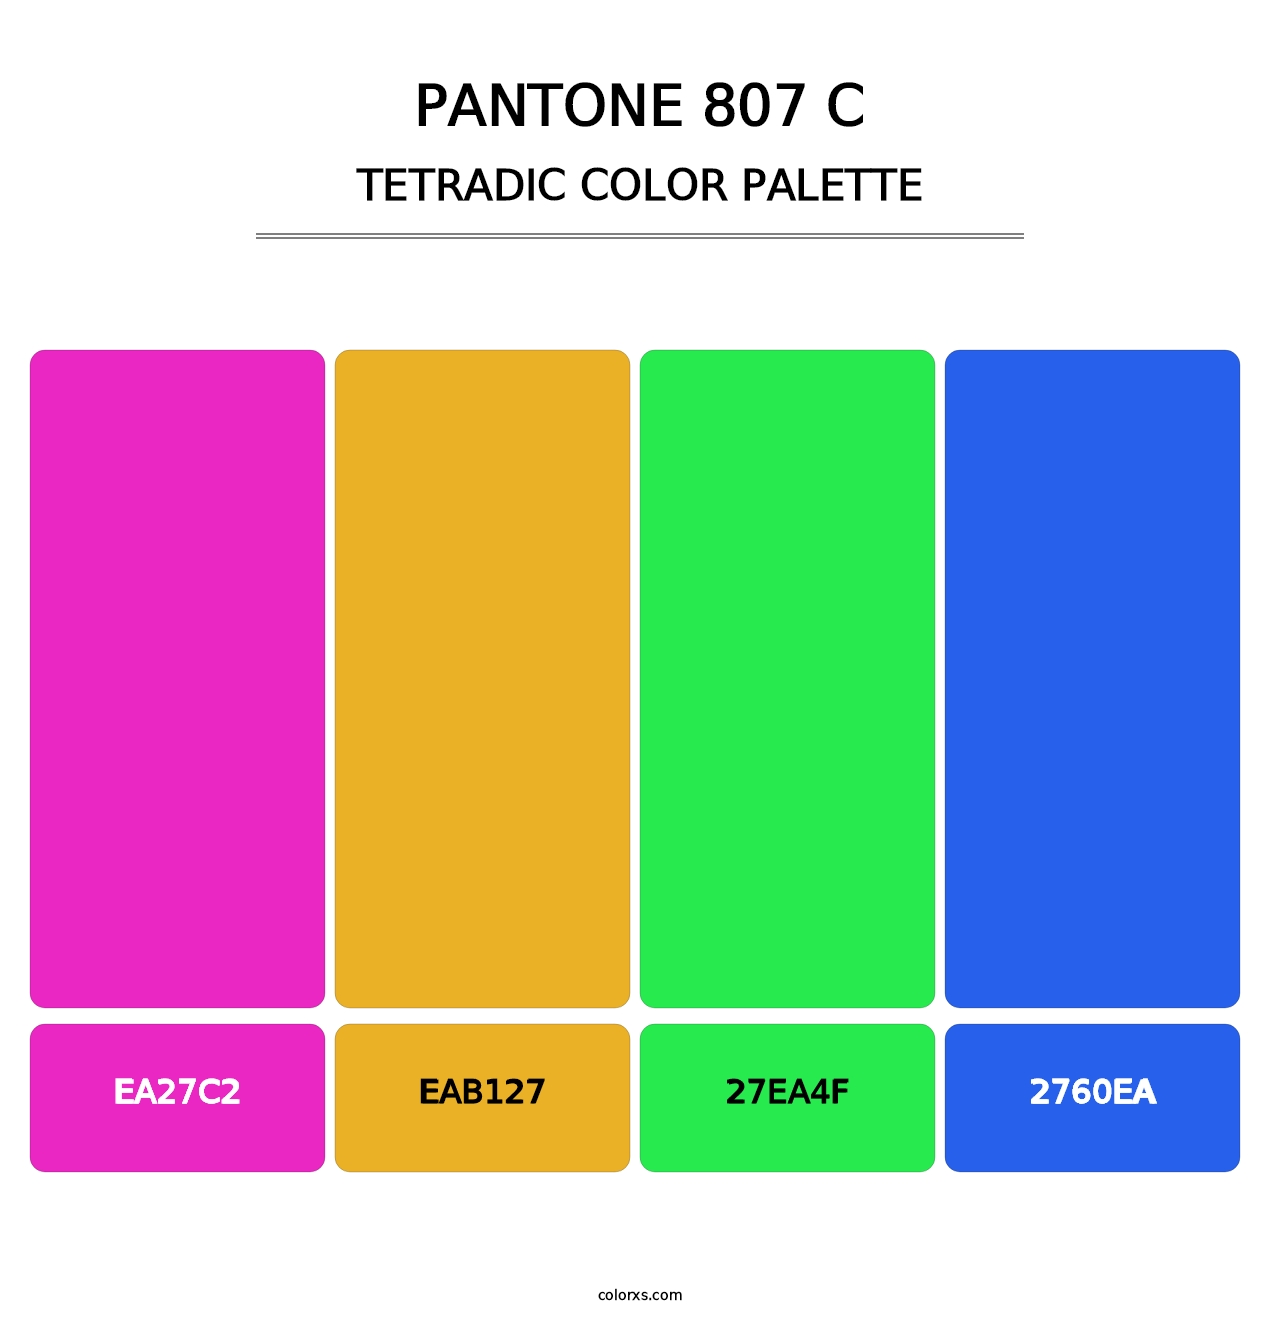 PANTONE 807 C - Tetradic Color Palette